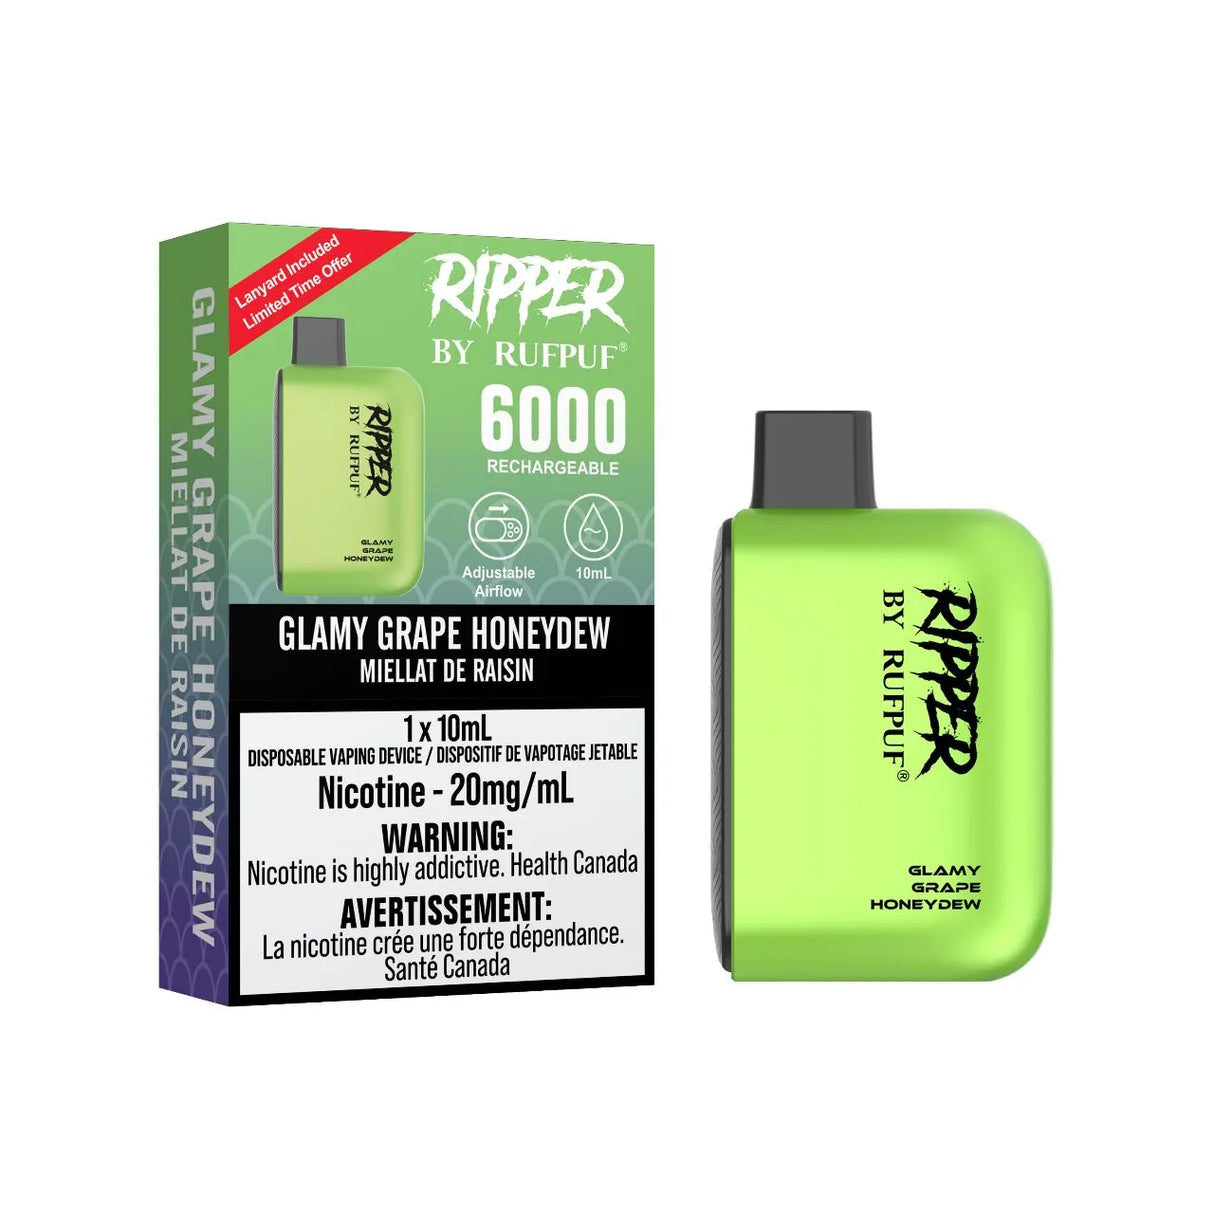 Glamy Grape Honeydew-  Rufpuf Ripper 6000